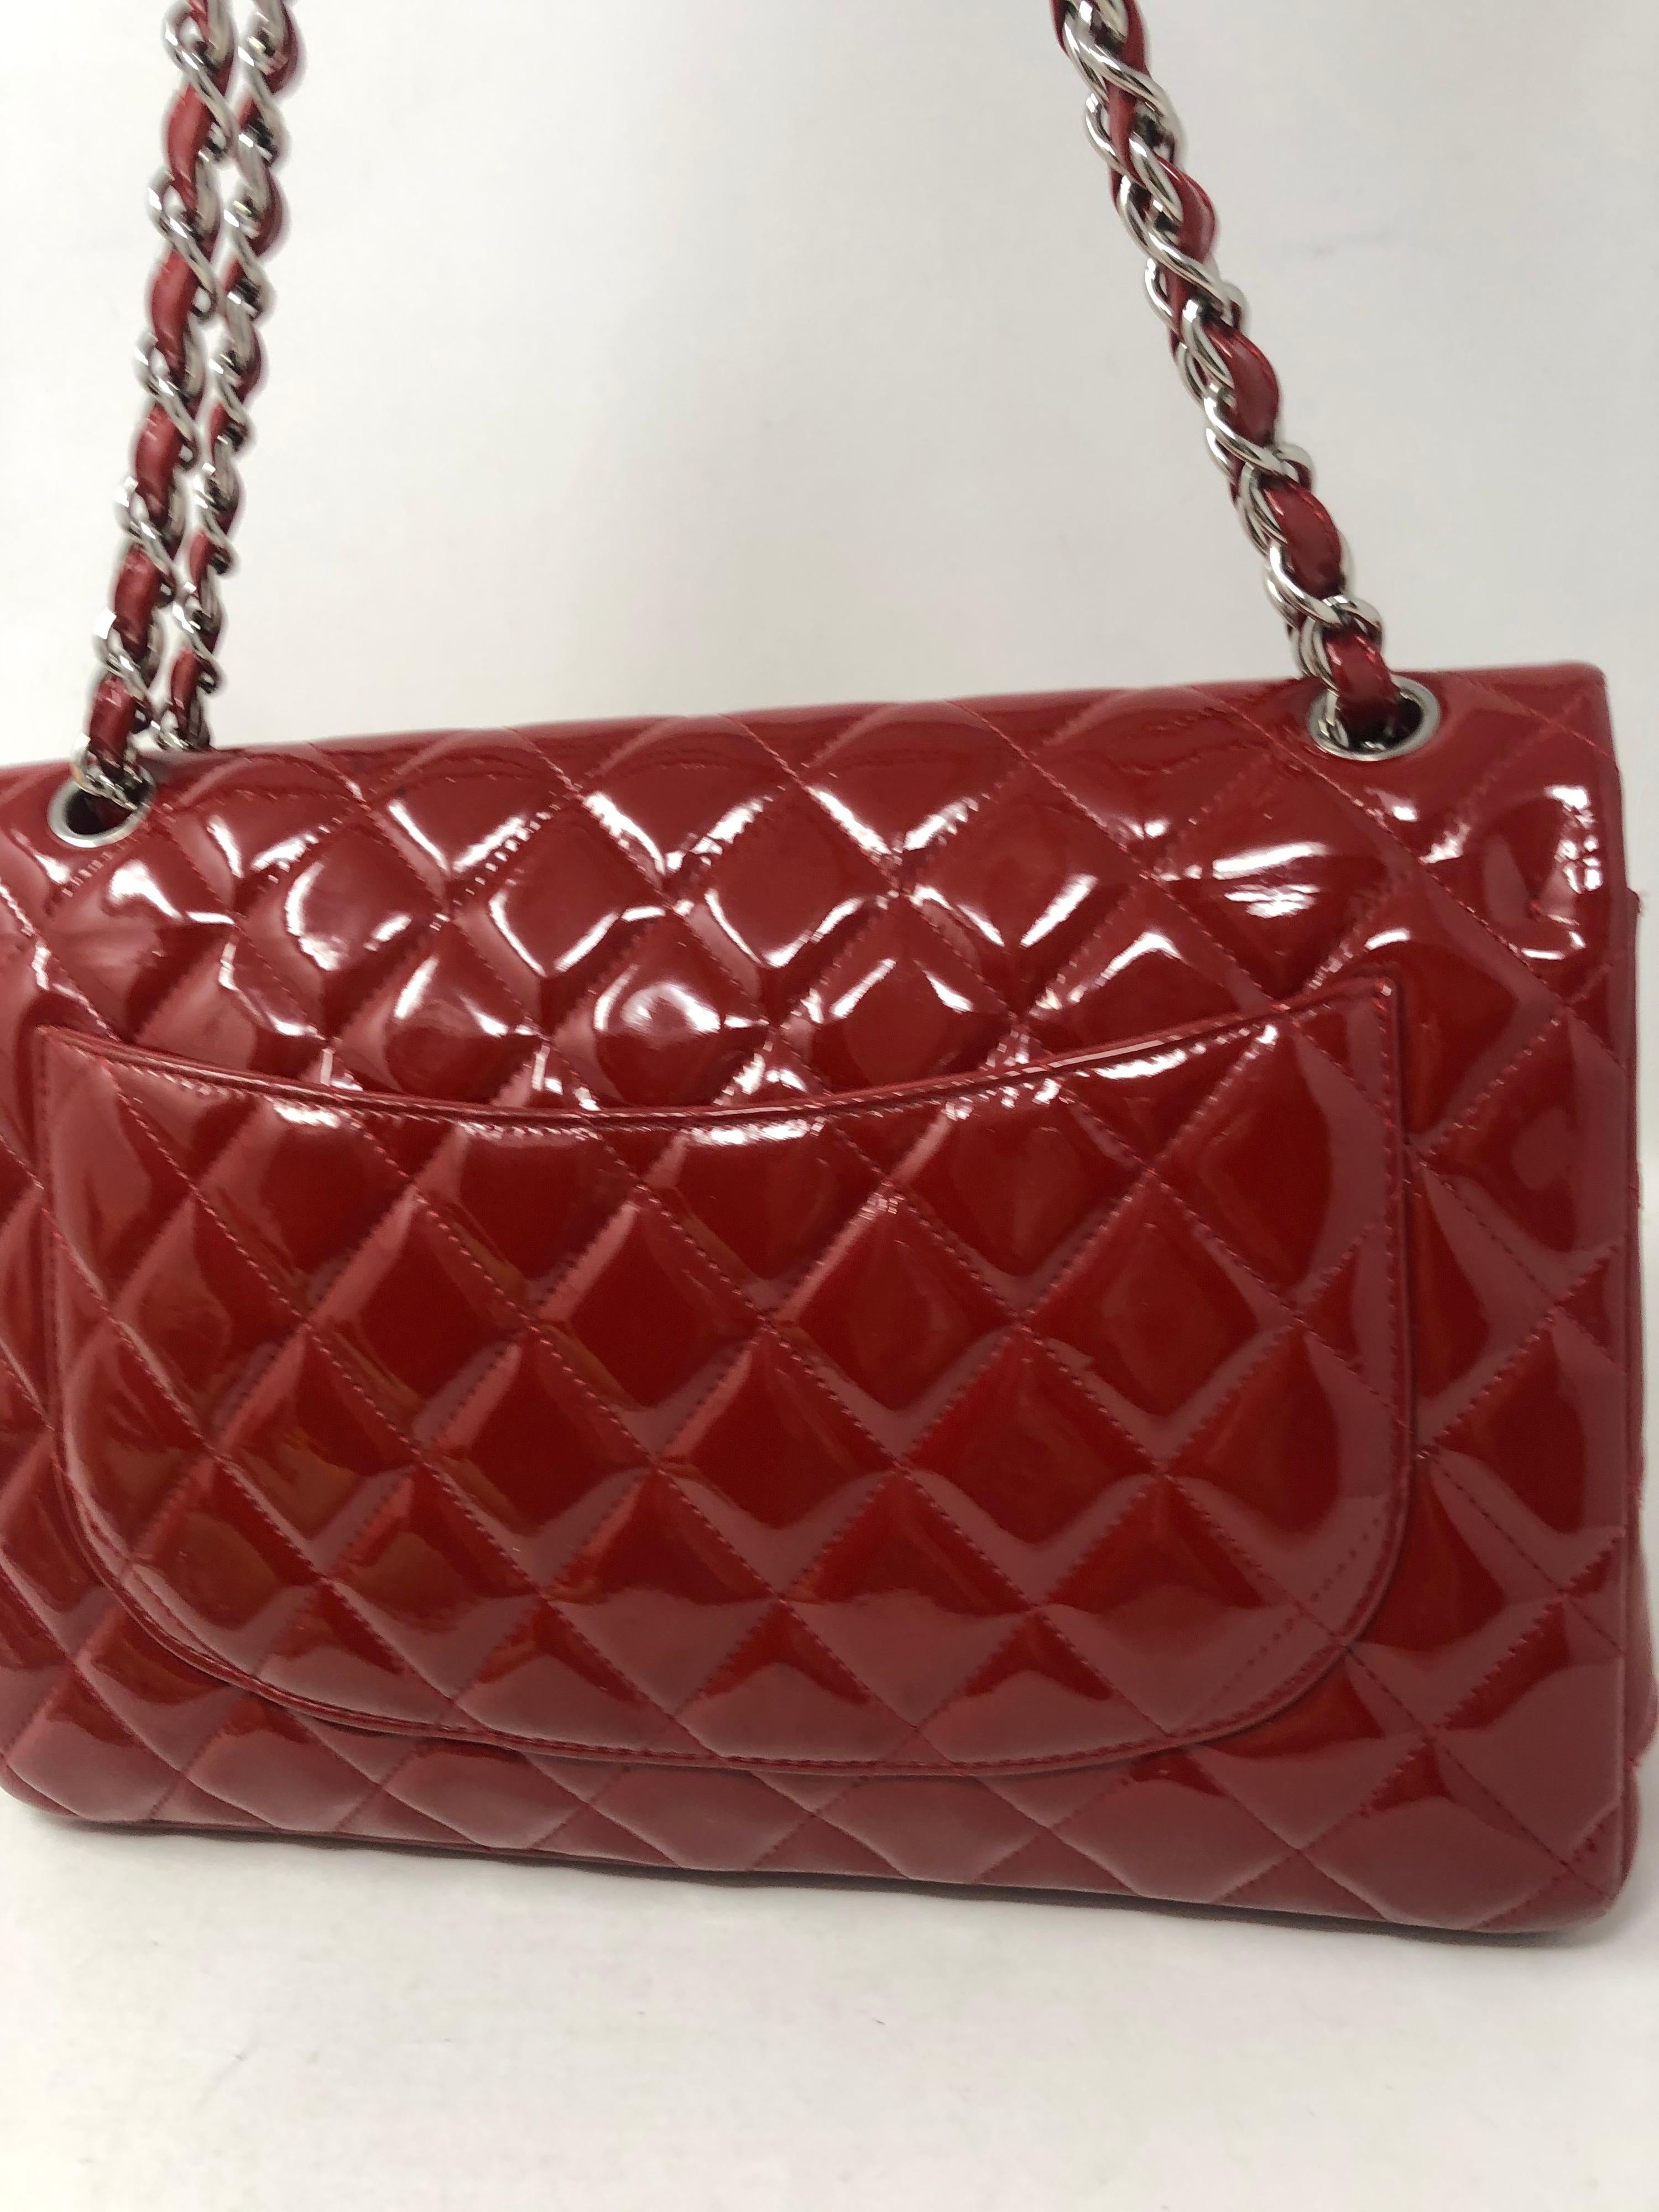 Chanel Red Patent Jumbo Bag  9